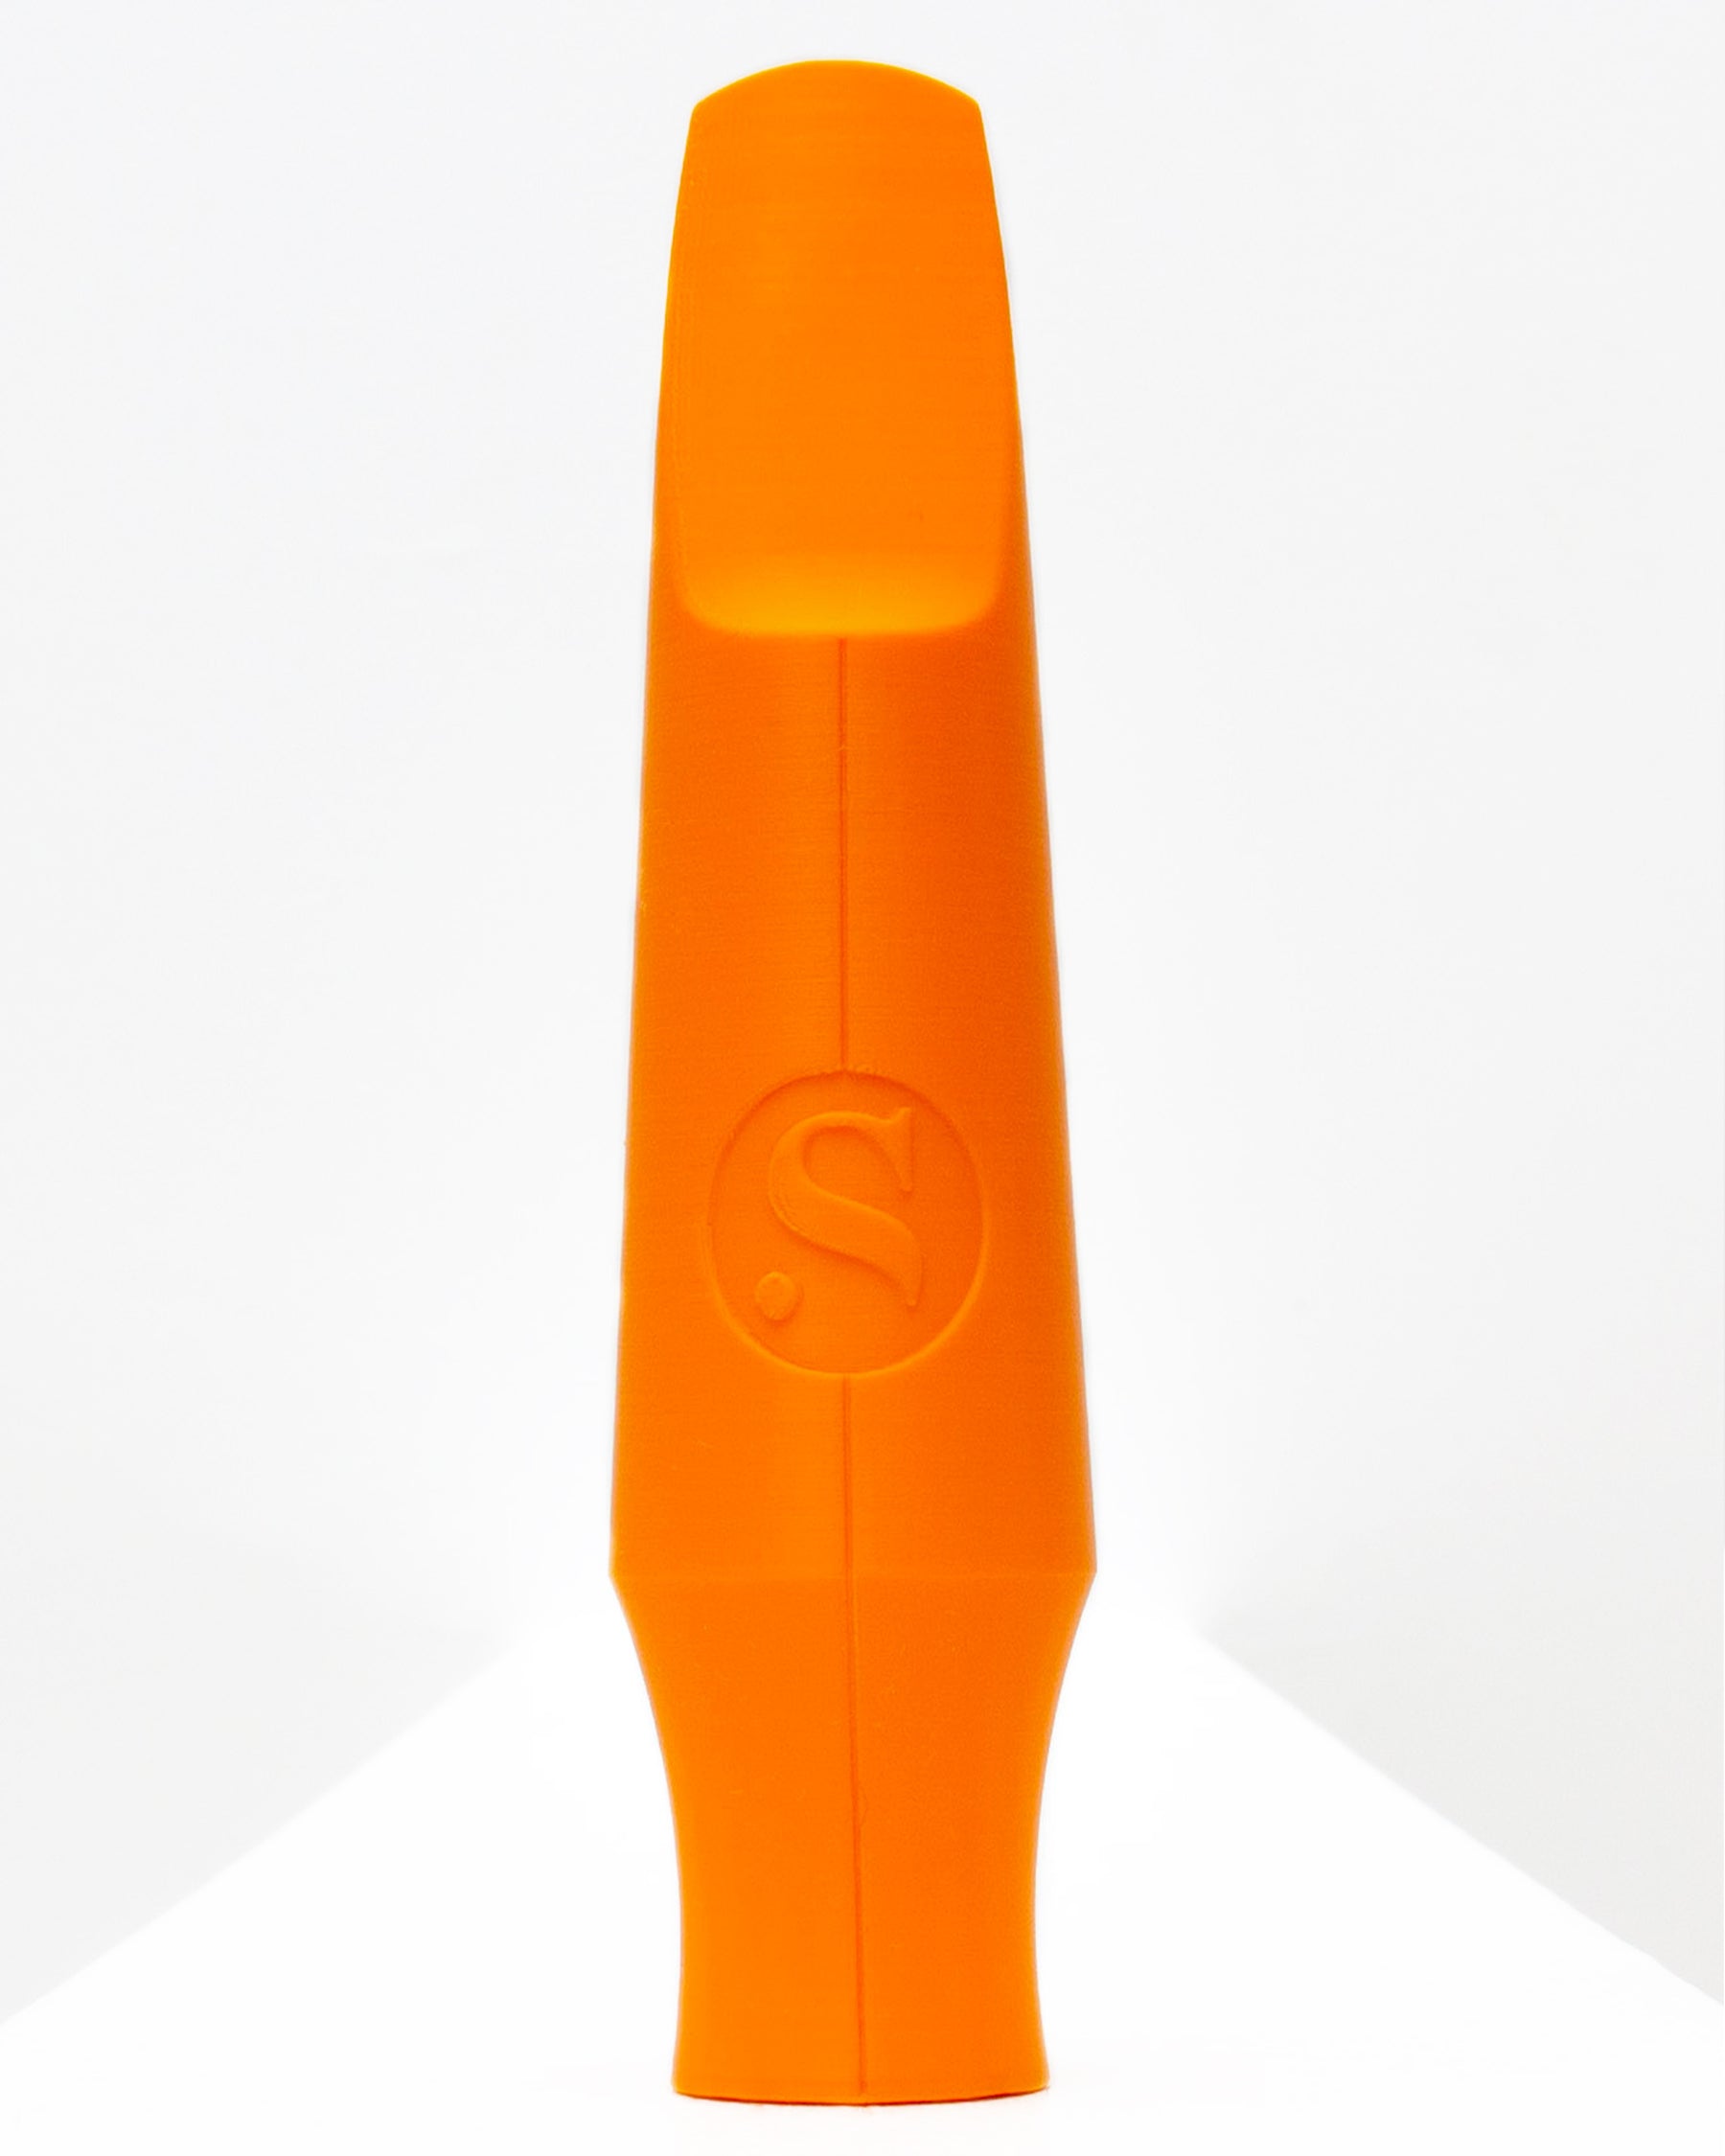 Bass Signature Saxophone mouthpiece - Michael Wilbur by Syos - 9 / Lava Orange